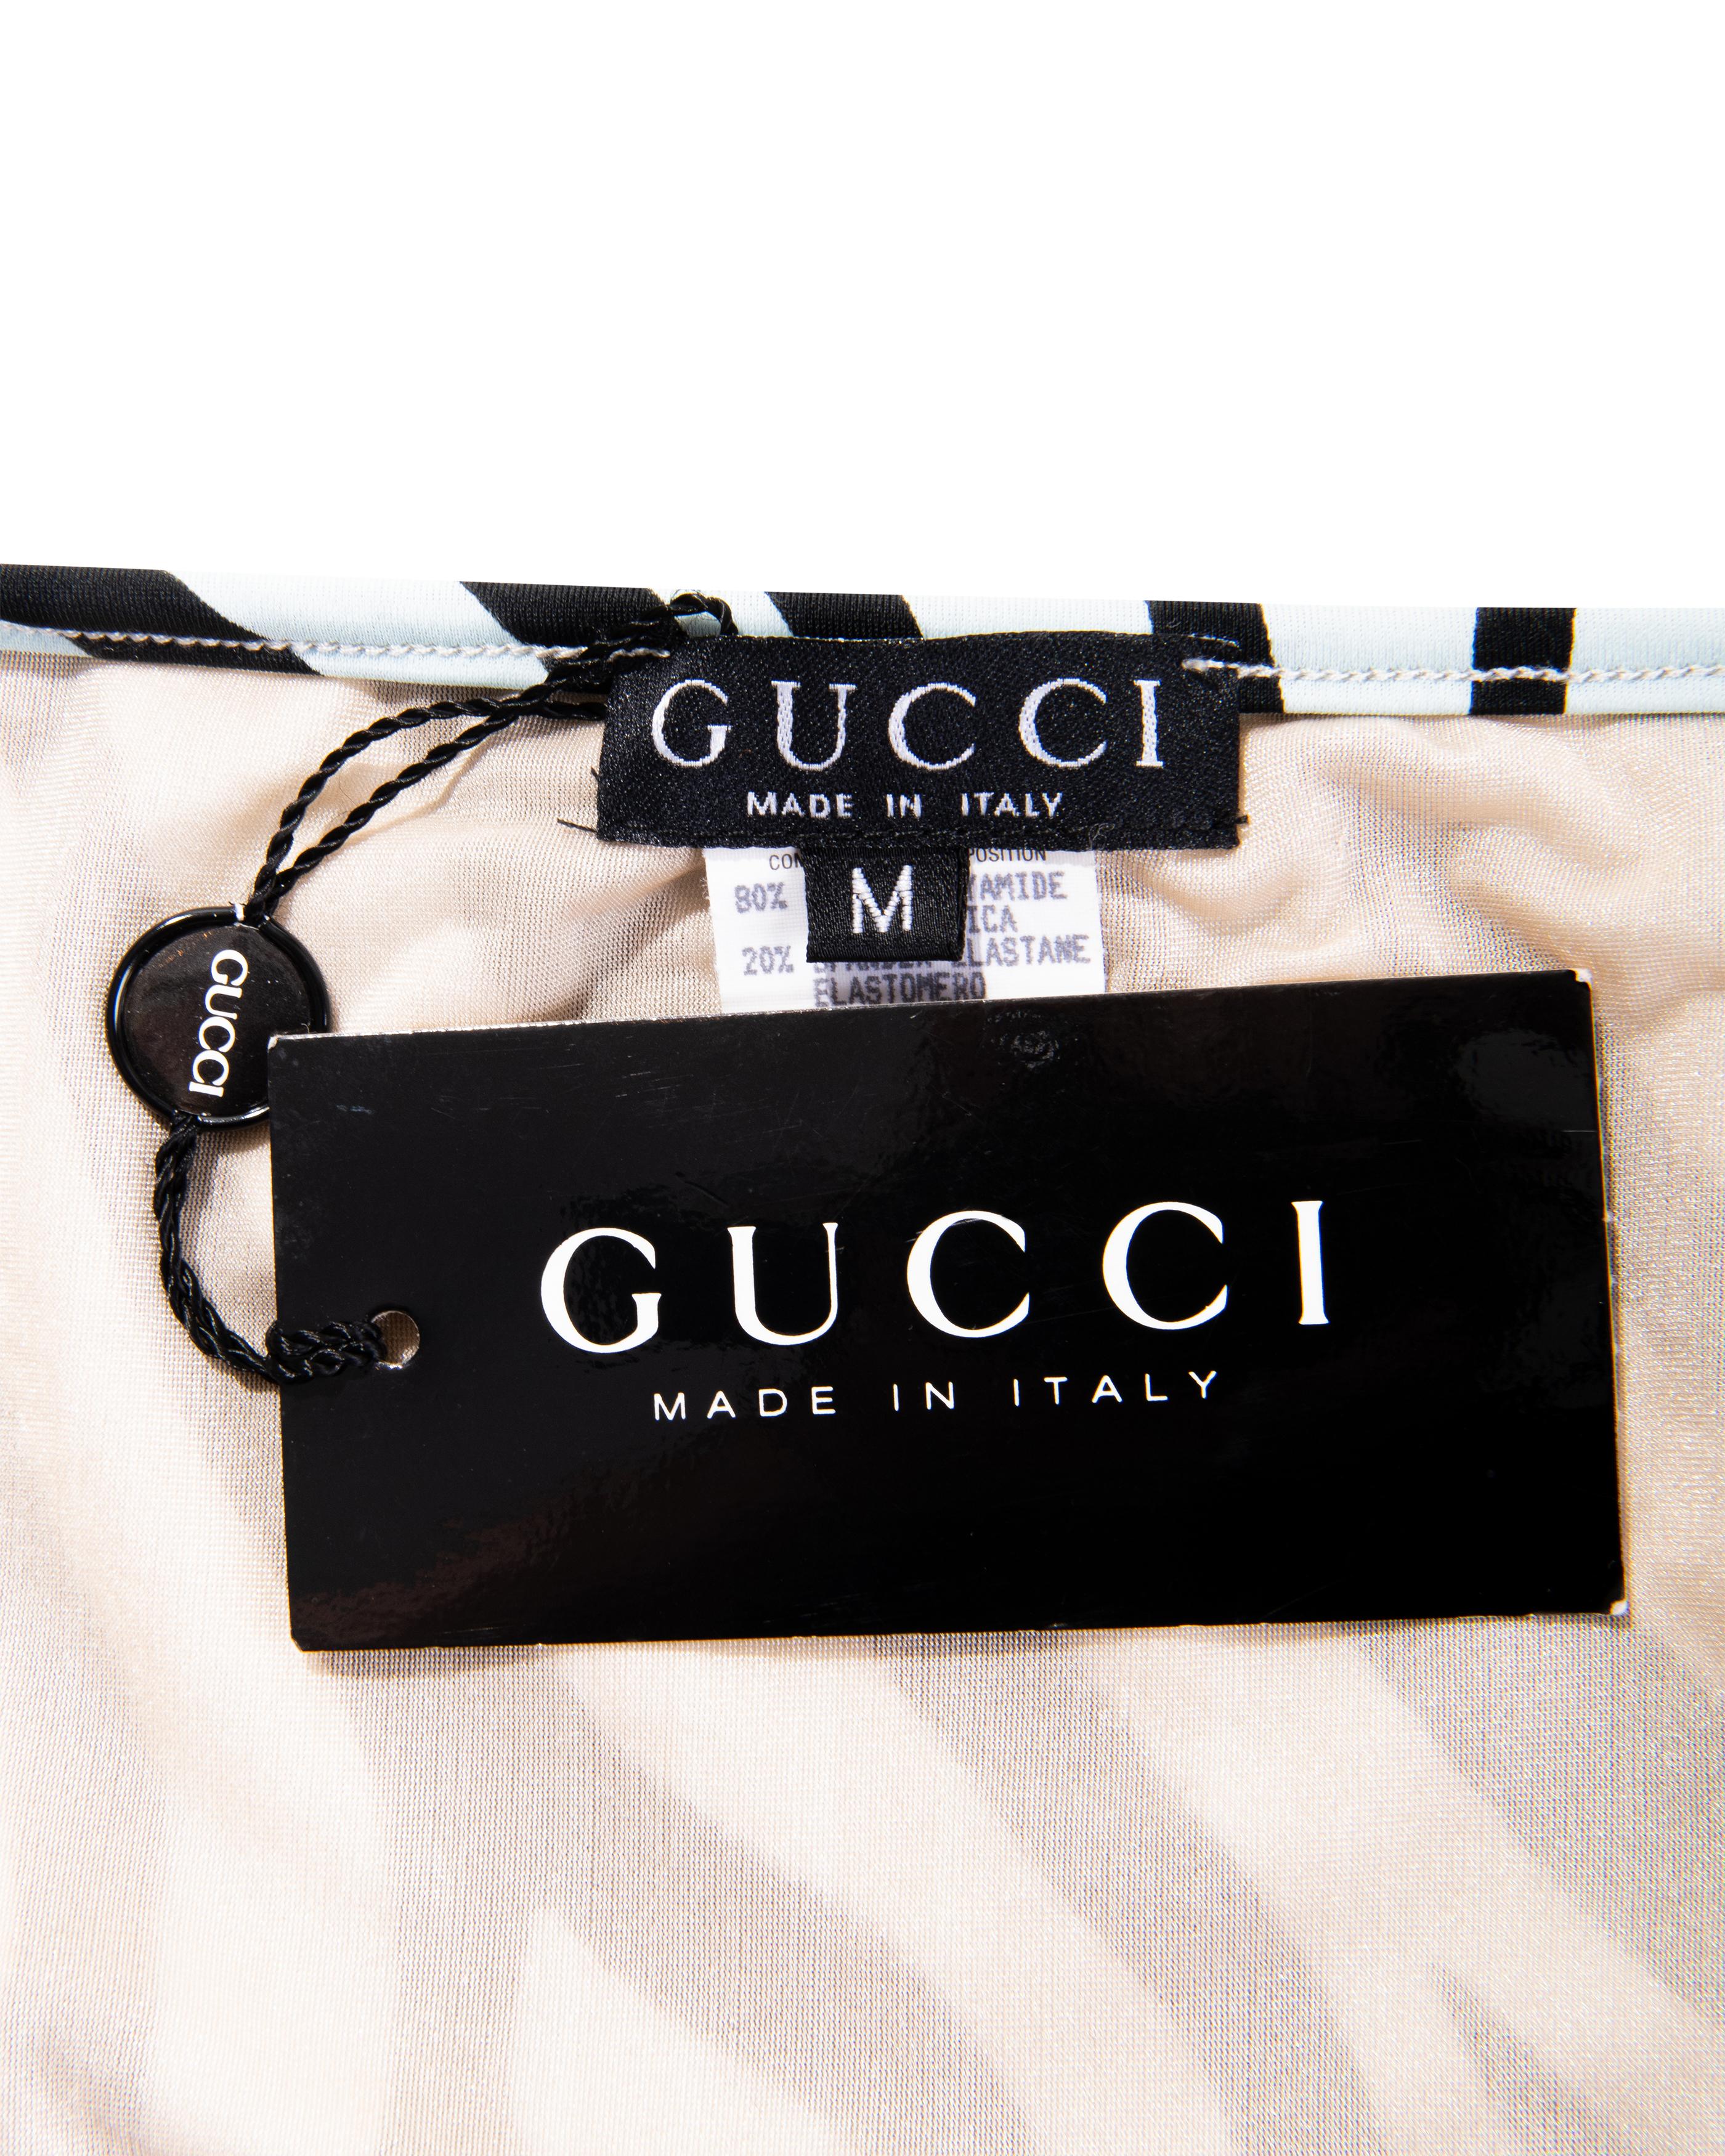 S/S 1996 Gucci by Tom Ford Blue and Black Zebra Print String Bikini For Sale 6